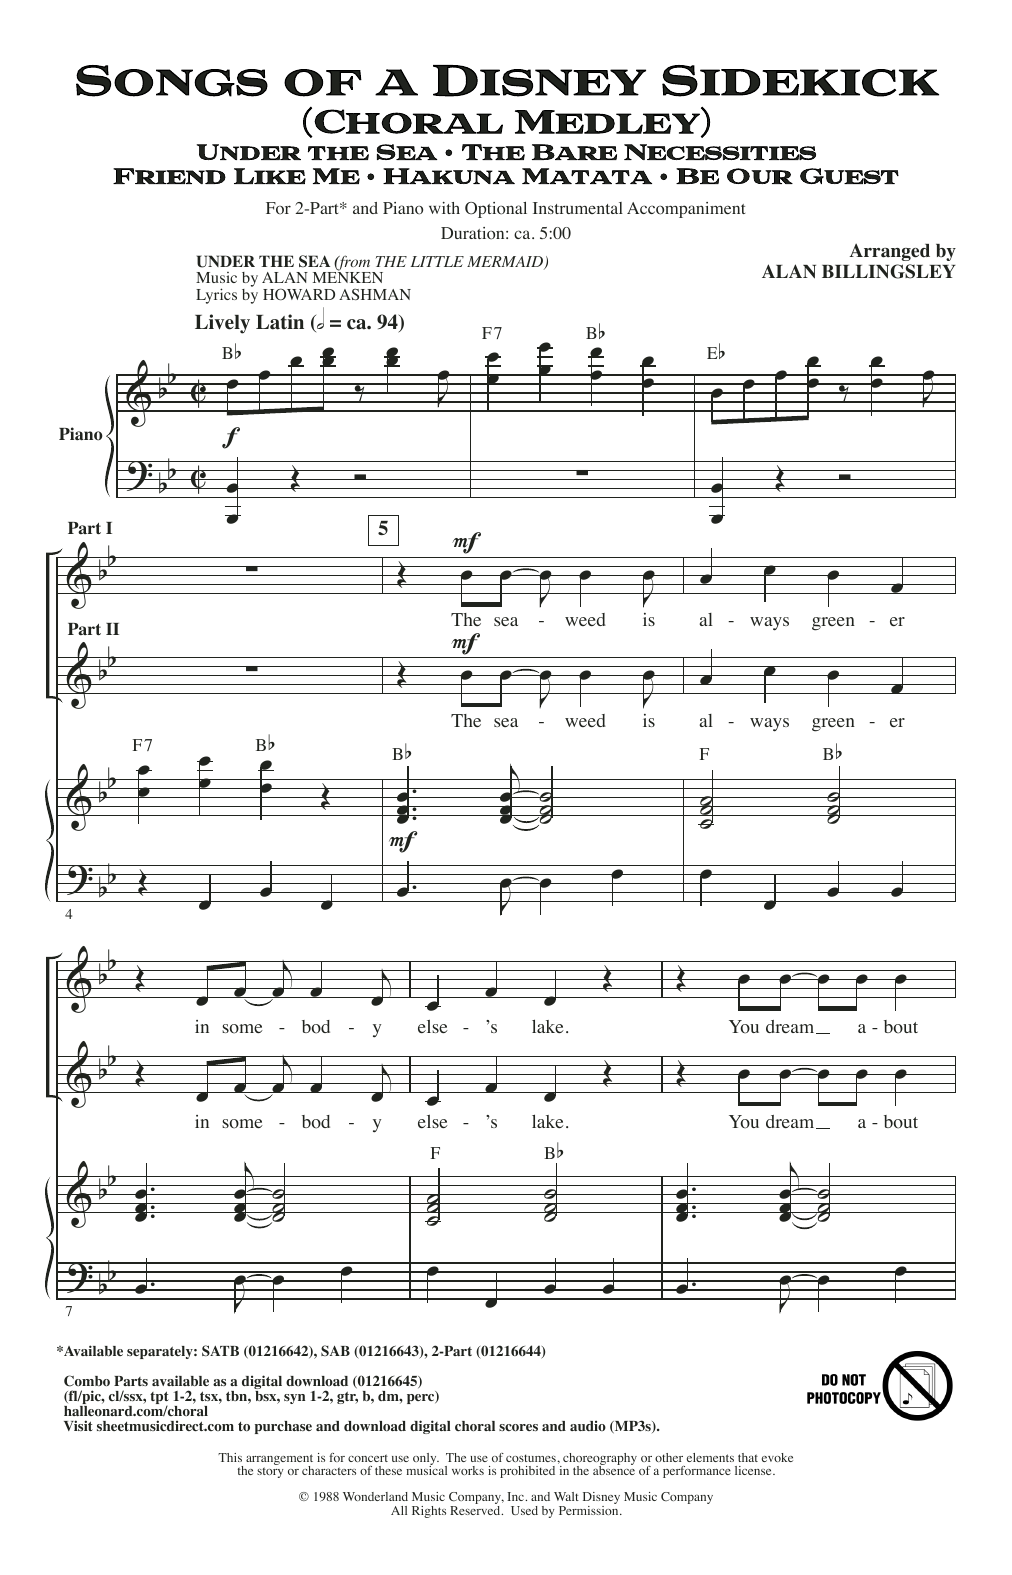 Alan Billingsley Songs of a Disney Sidekick (Choral Medley) Sheet Music Notes & Chords for 2-Part Choir - Download or Print PDF